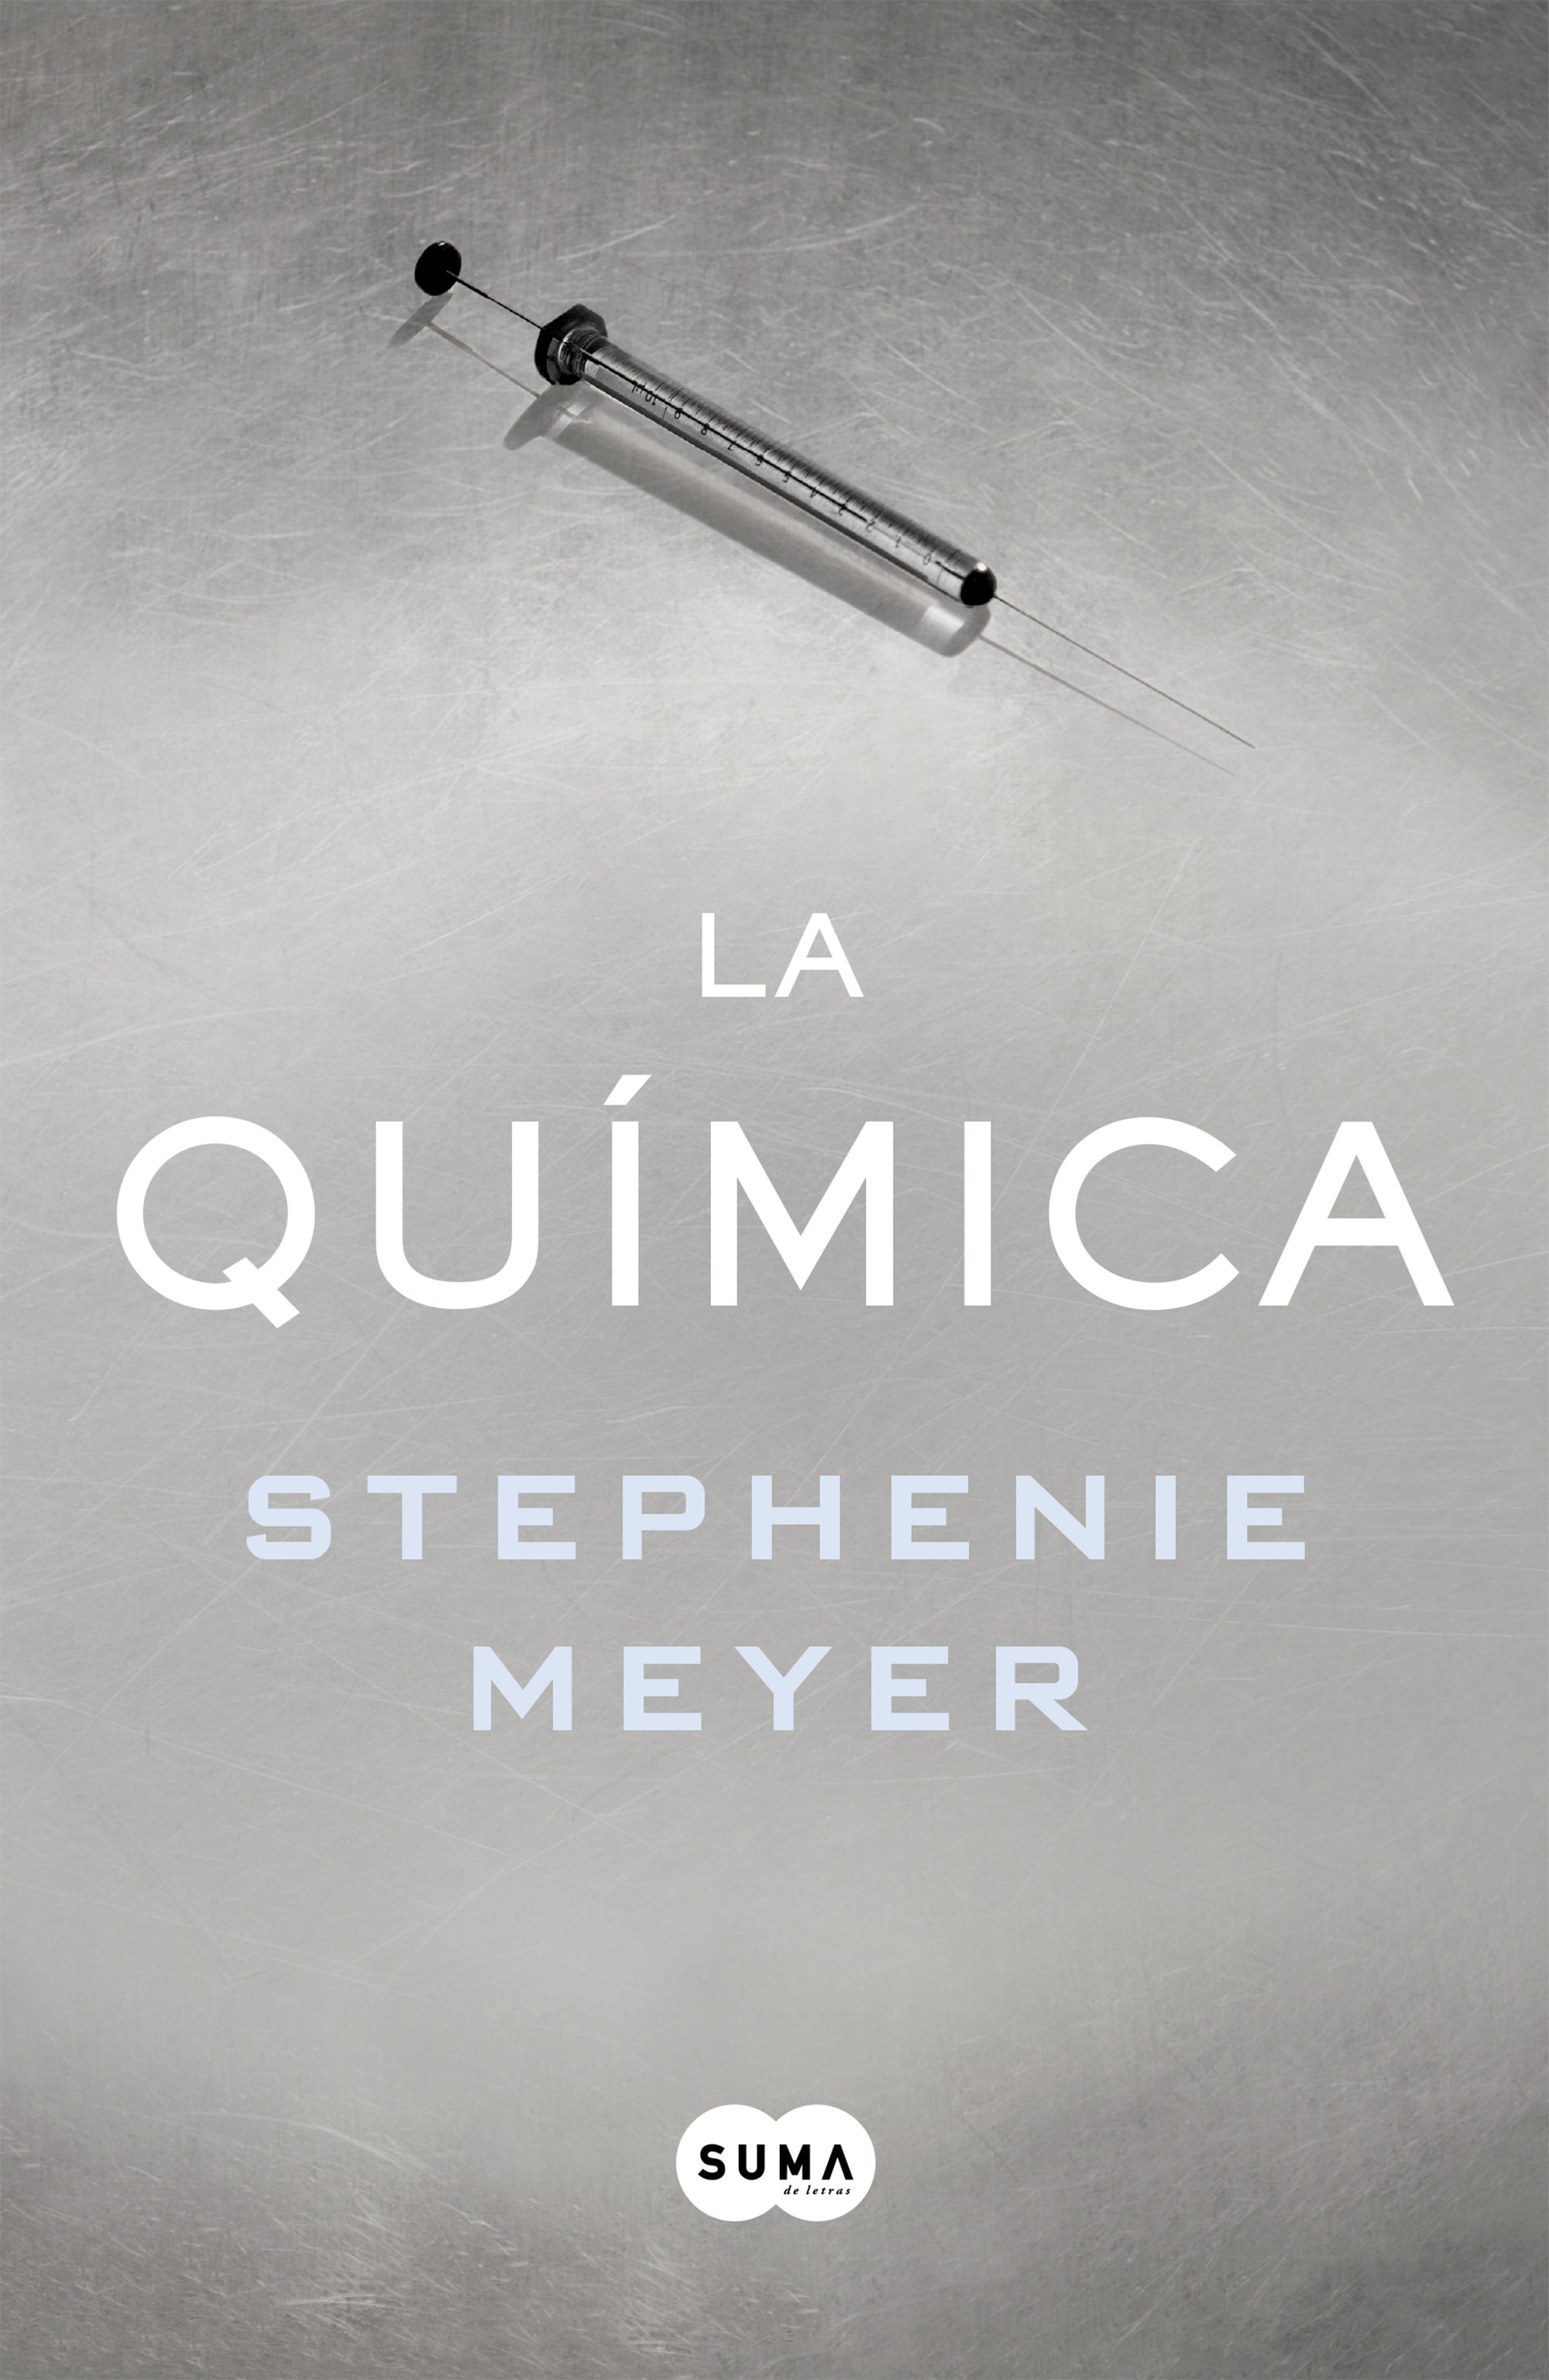 Imagen La química.  Stephenie Meyer 1